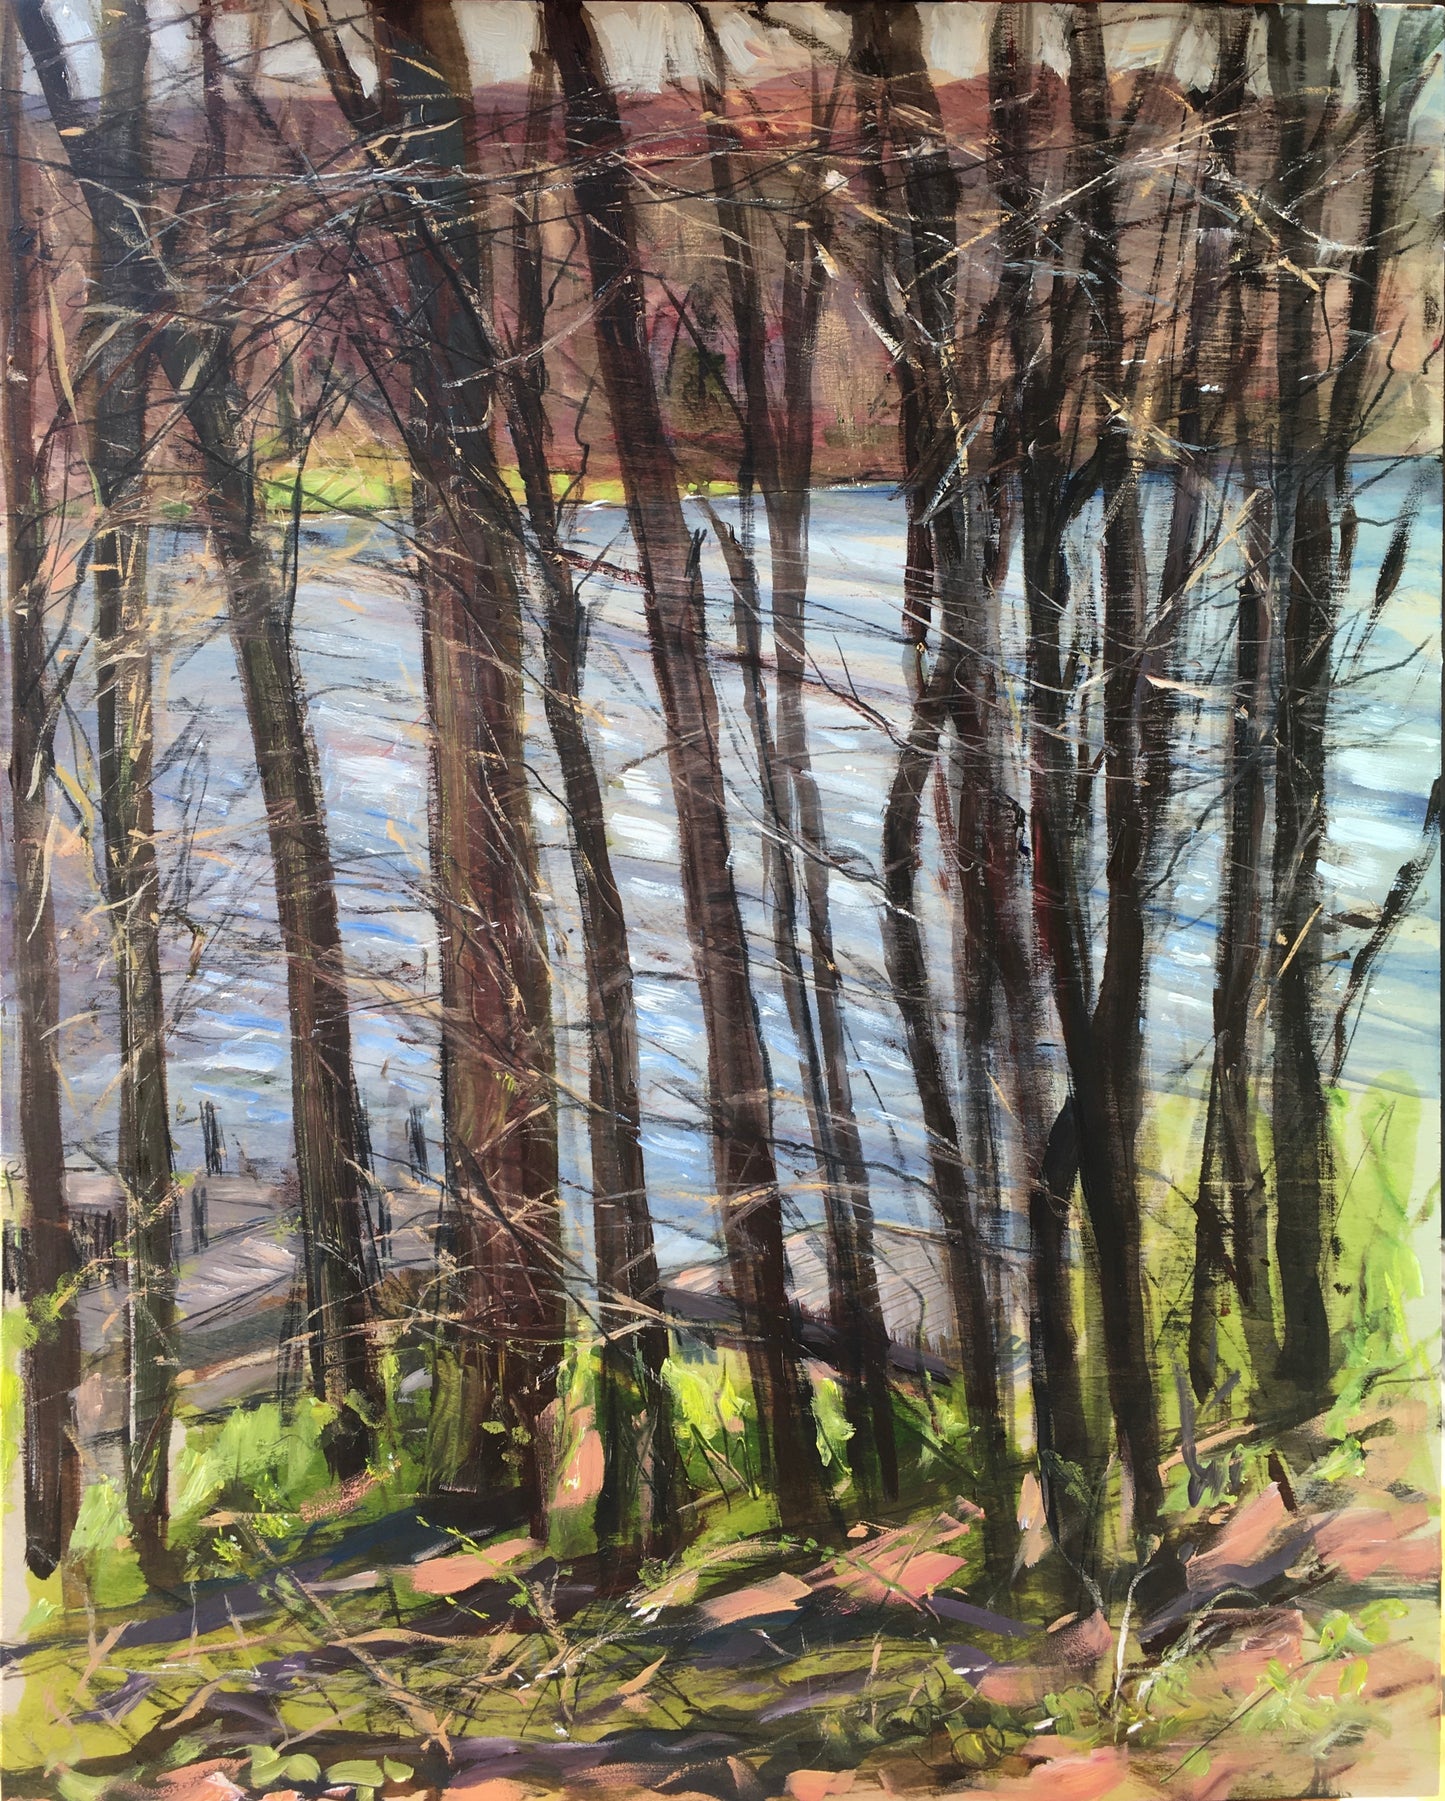 Upton Lake through the Trees, 12:15 pm, April 19th, 2020